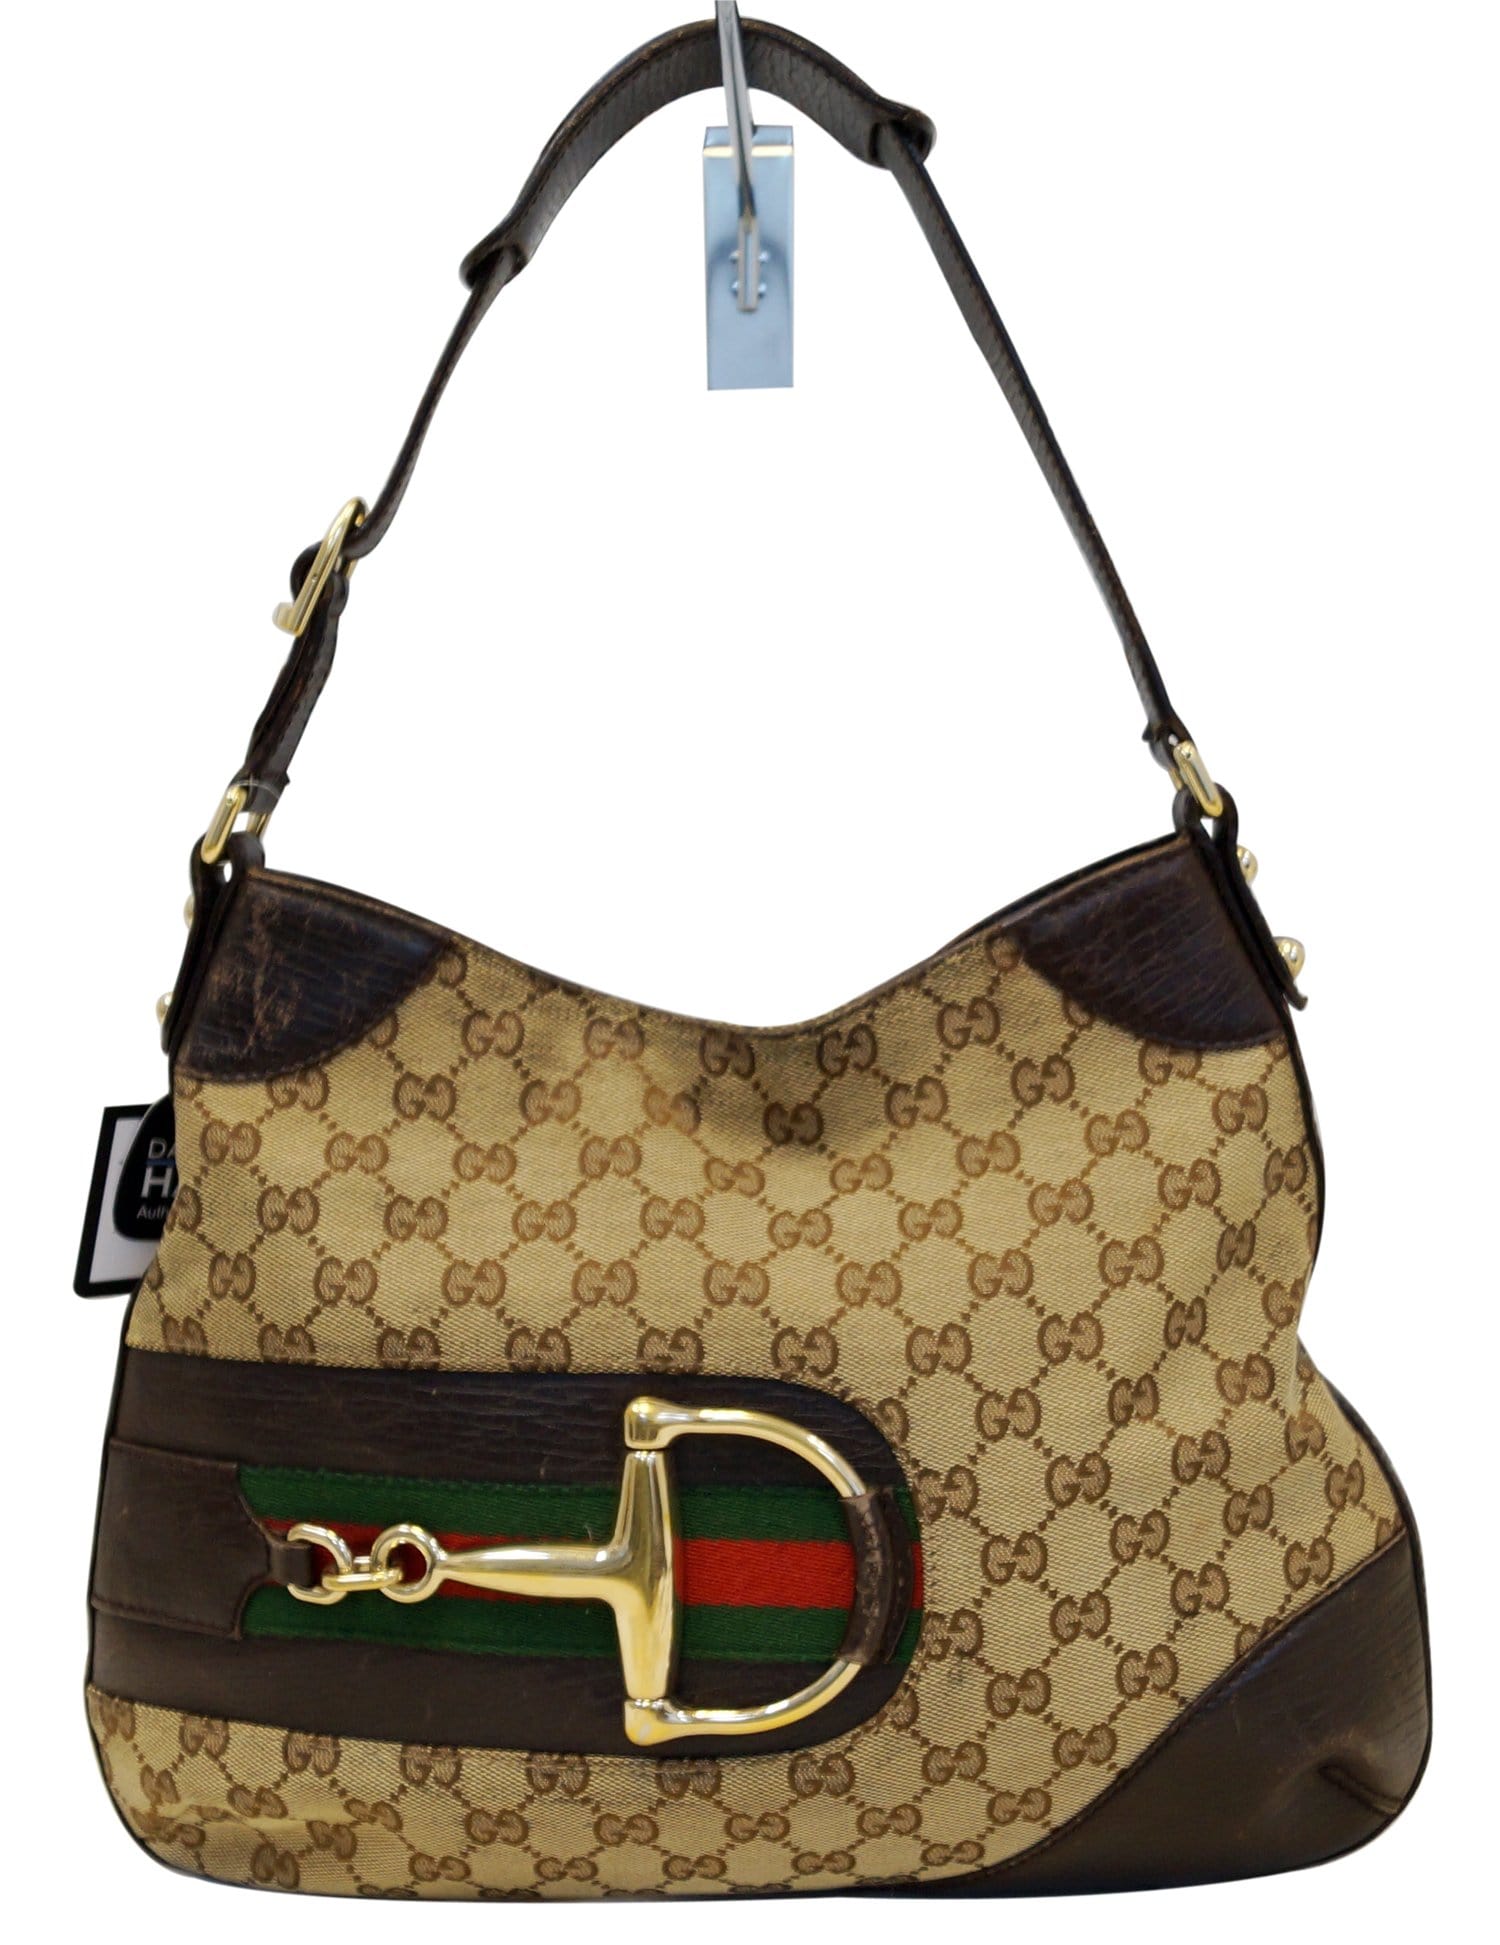 Gucci Horsebit GG Canvas Large Hobo Bag Beige Color